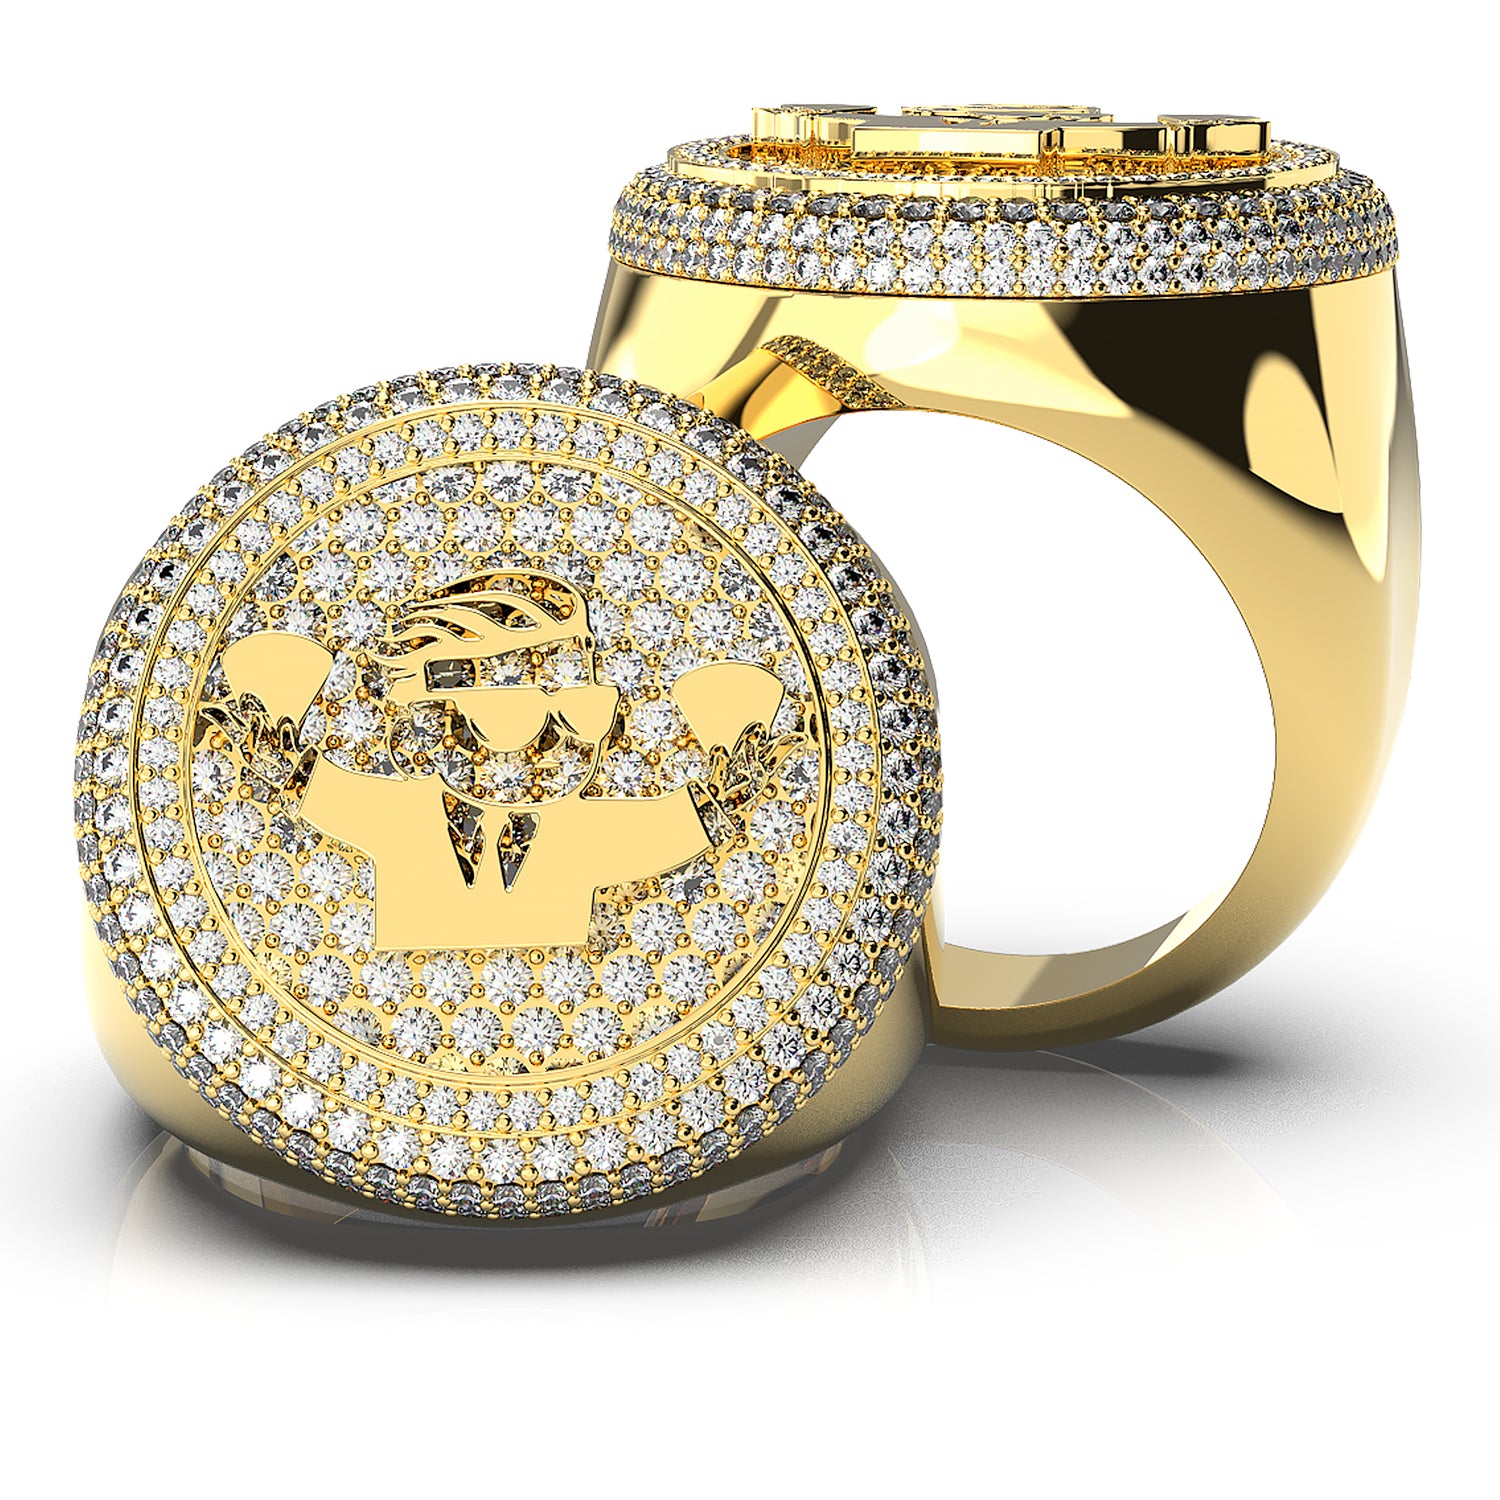 The Diamond Hands Ring